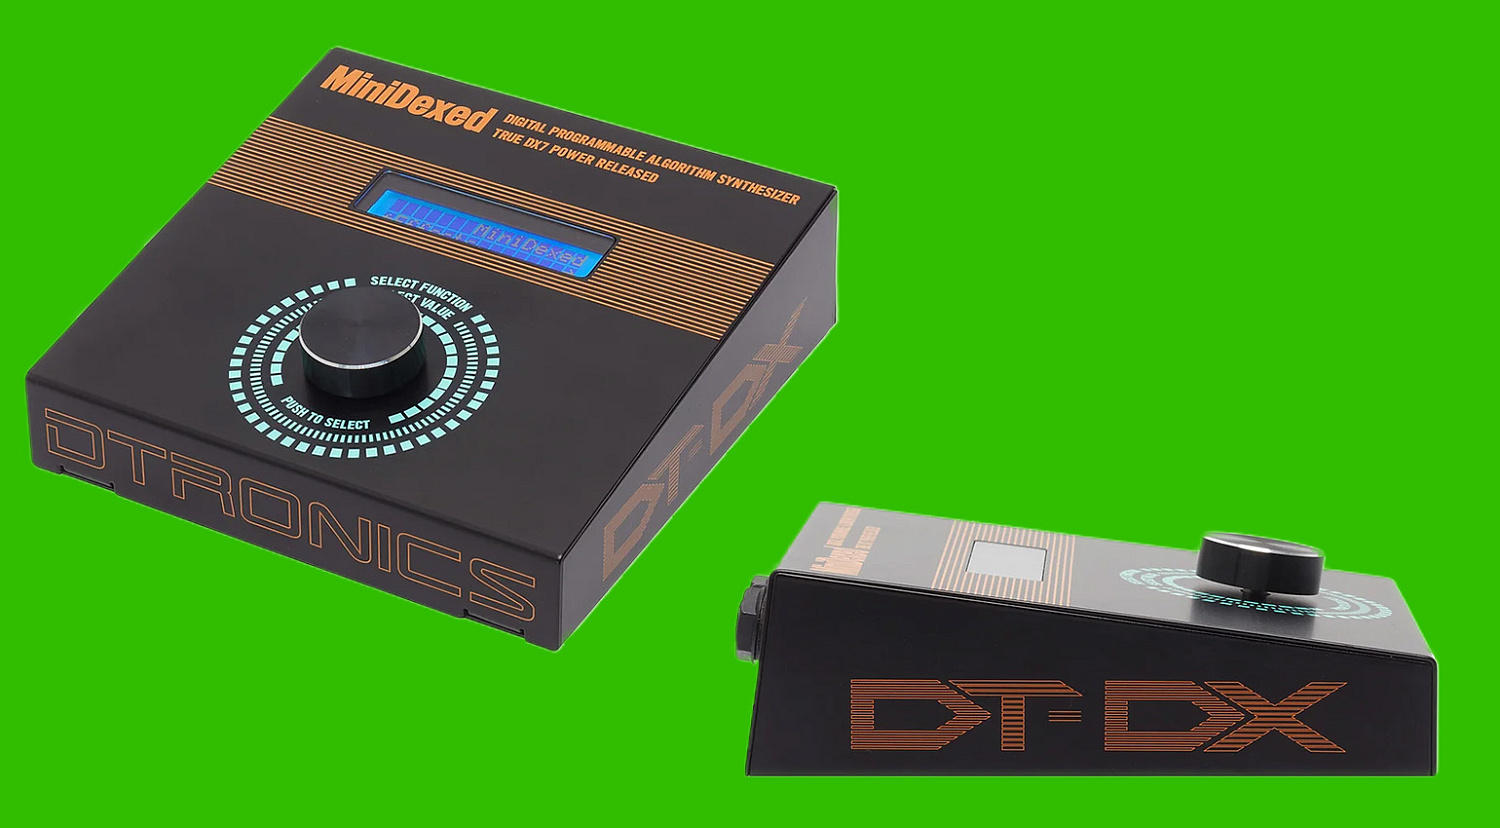 Dtronics DT-DX: TX816 (8x DX7) в коробке